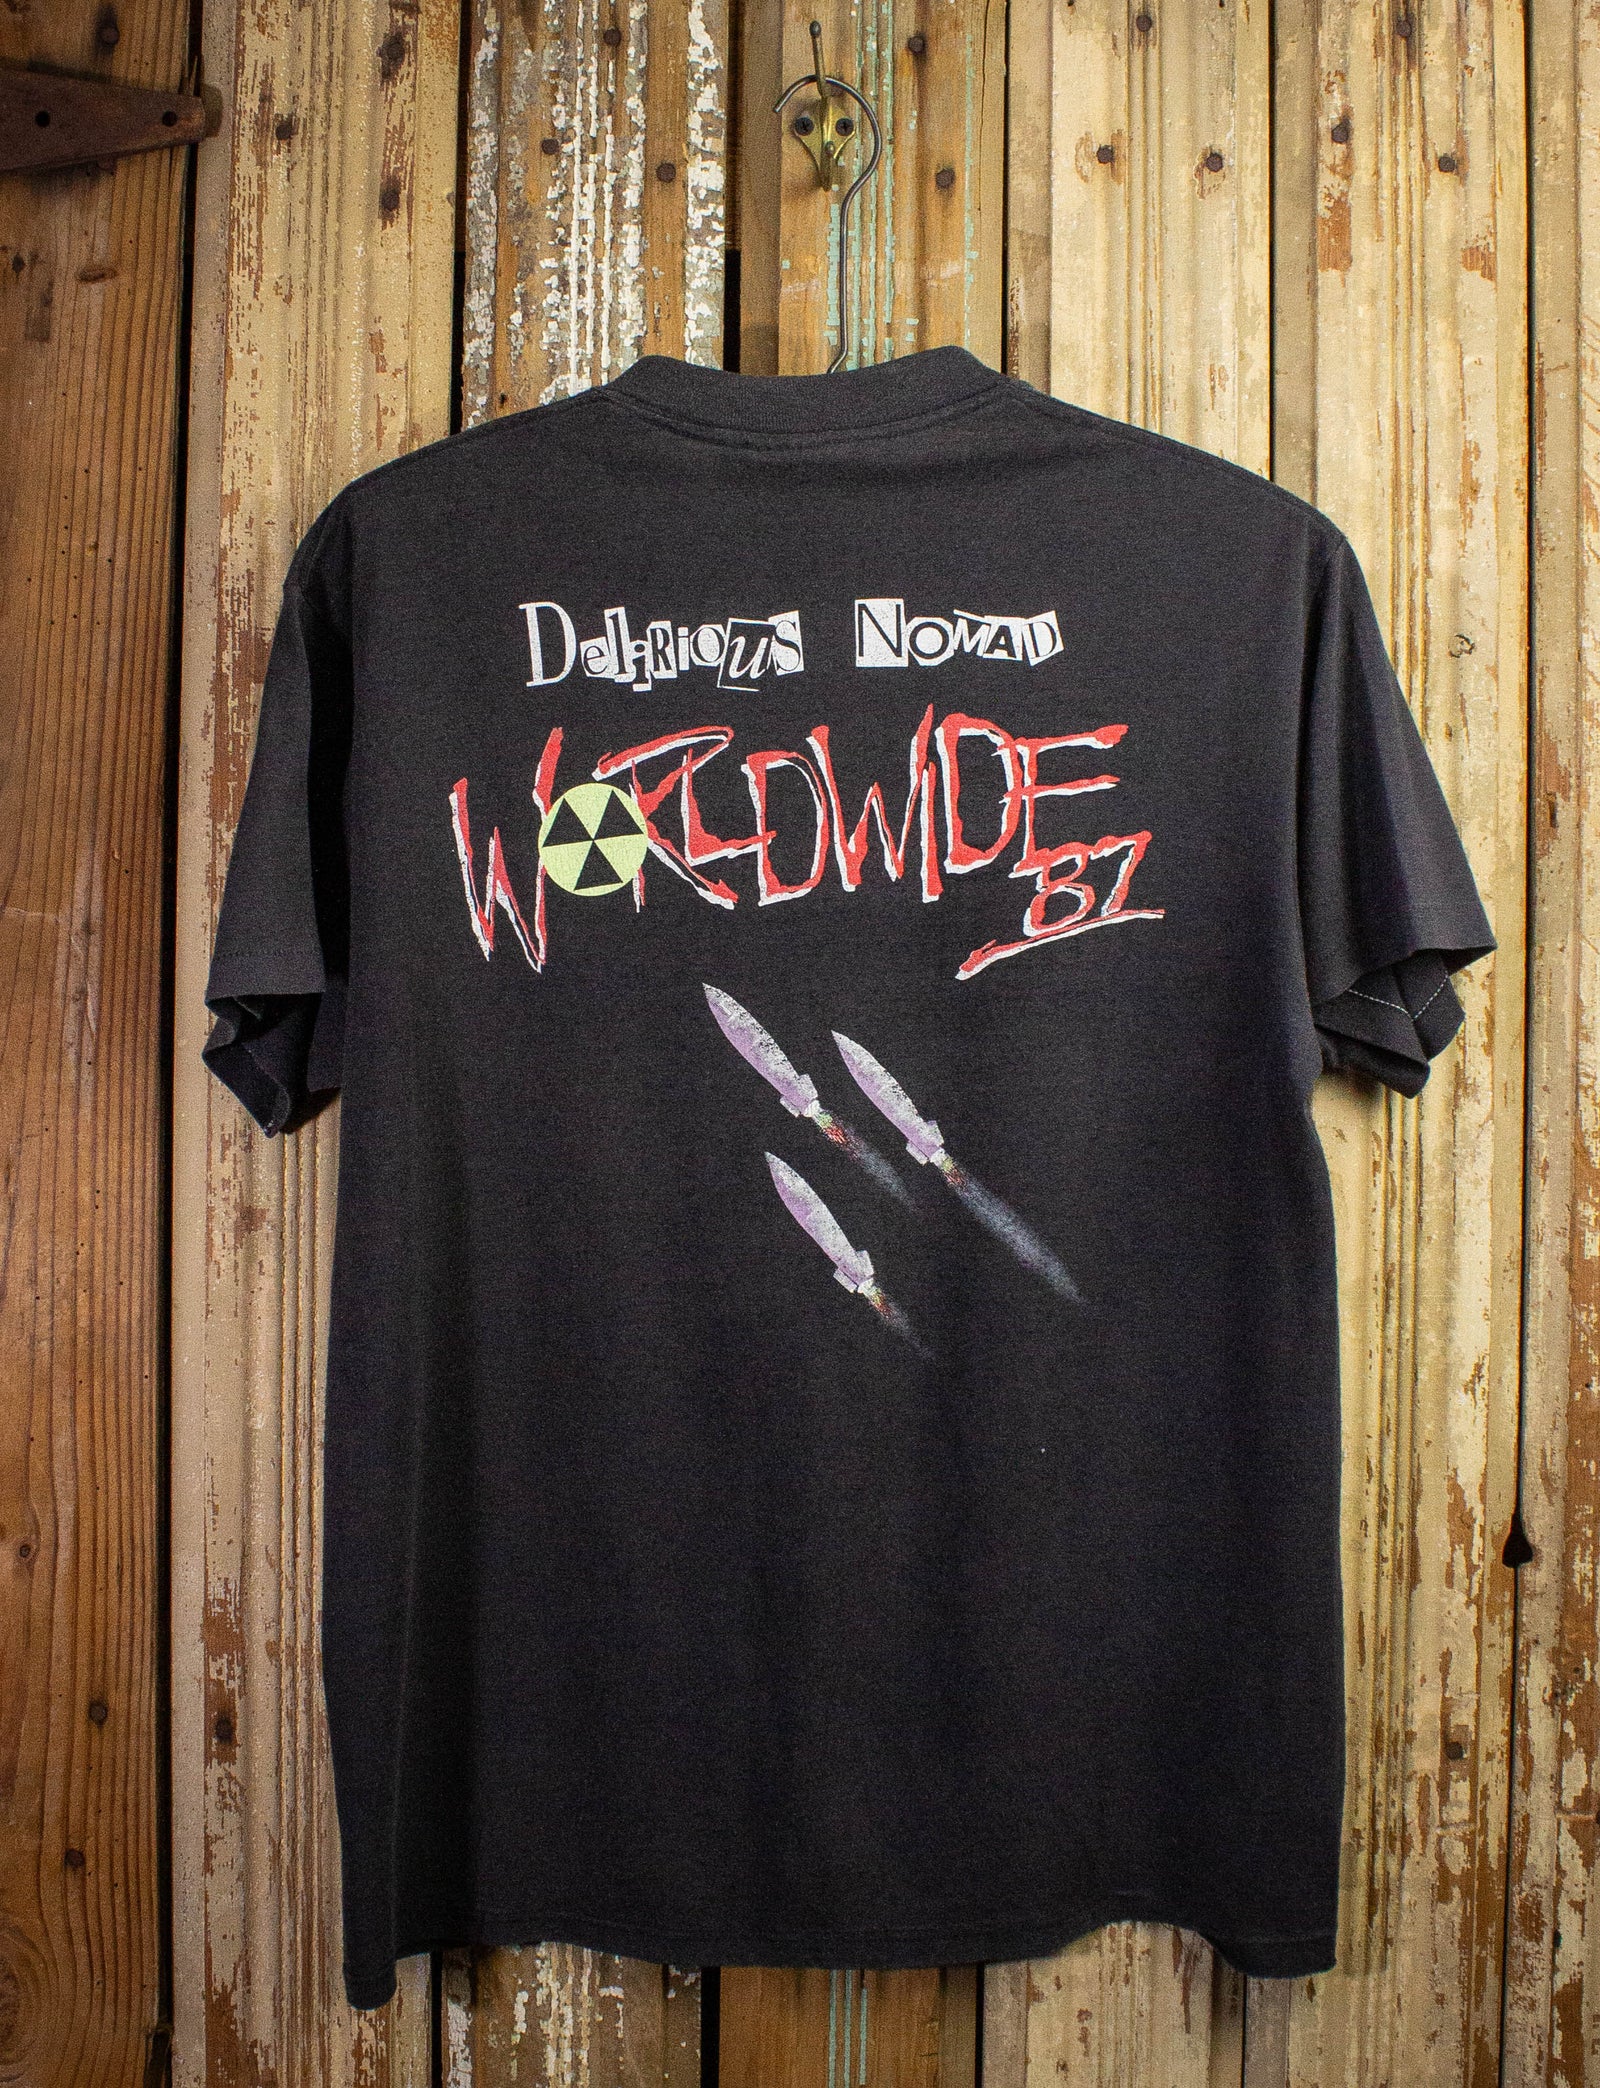 Vintage Armored Saint Delirious Nomad Concert T Shirt 1987 Black Medium